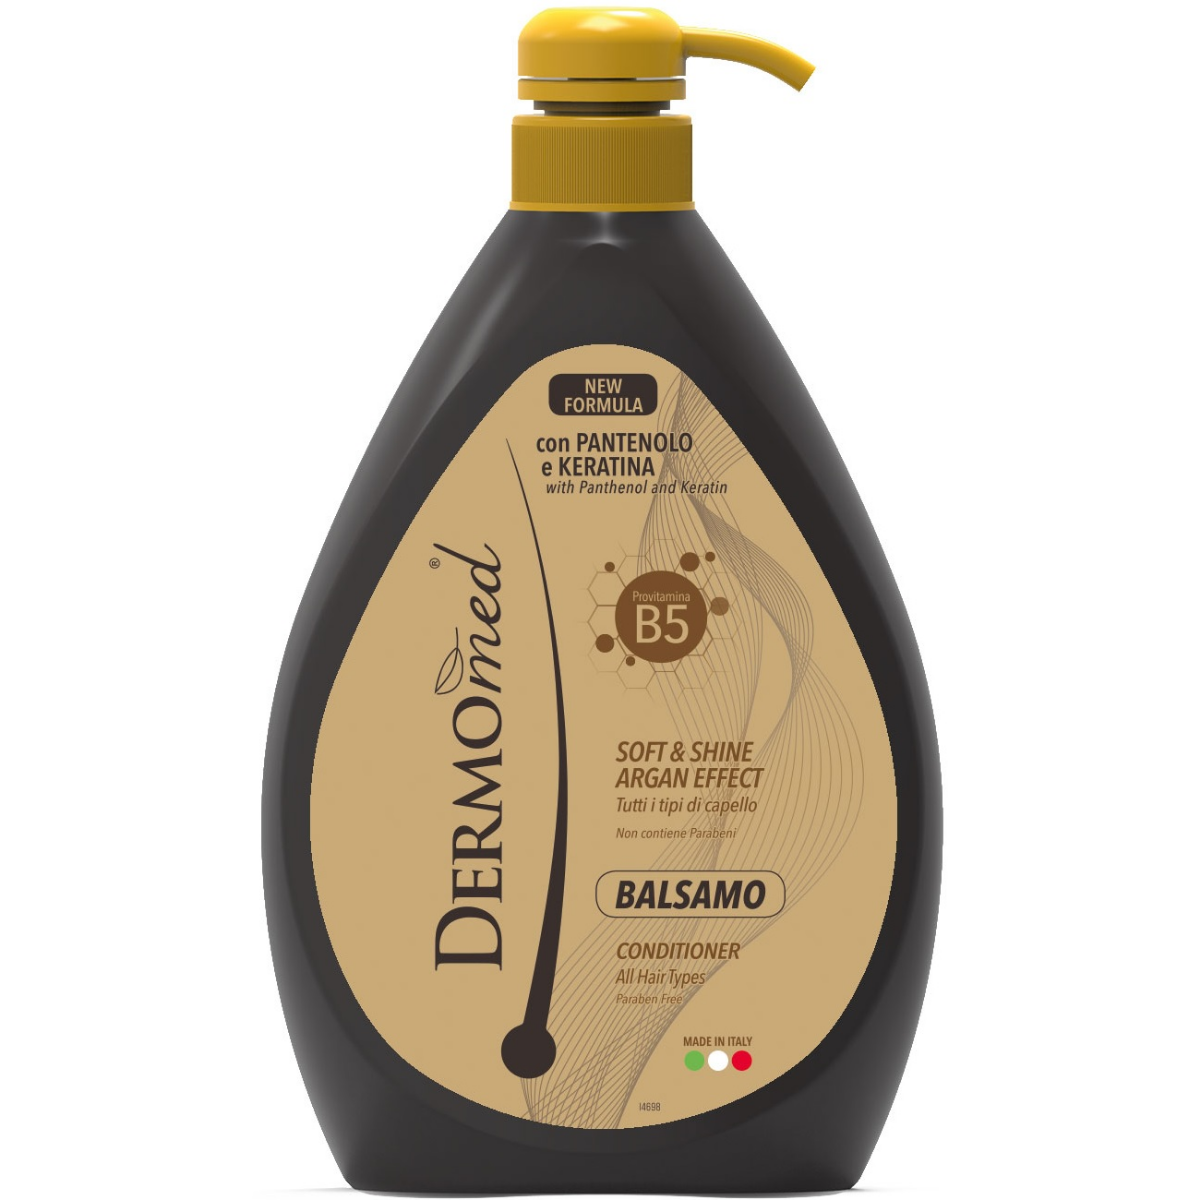 Dermomed Balsamo Conditioner 600ml Soft Shine Argan Effect With Keratin.